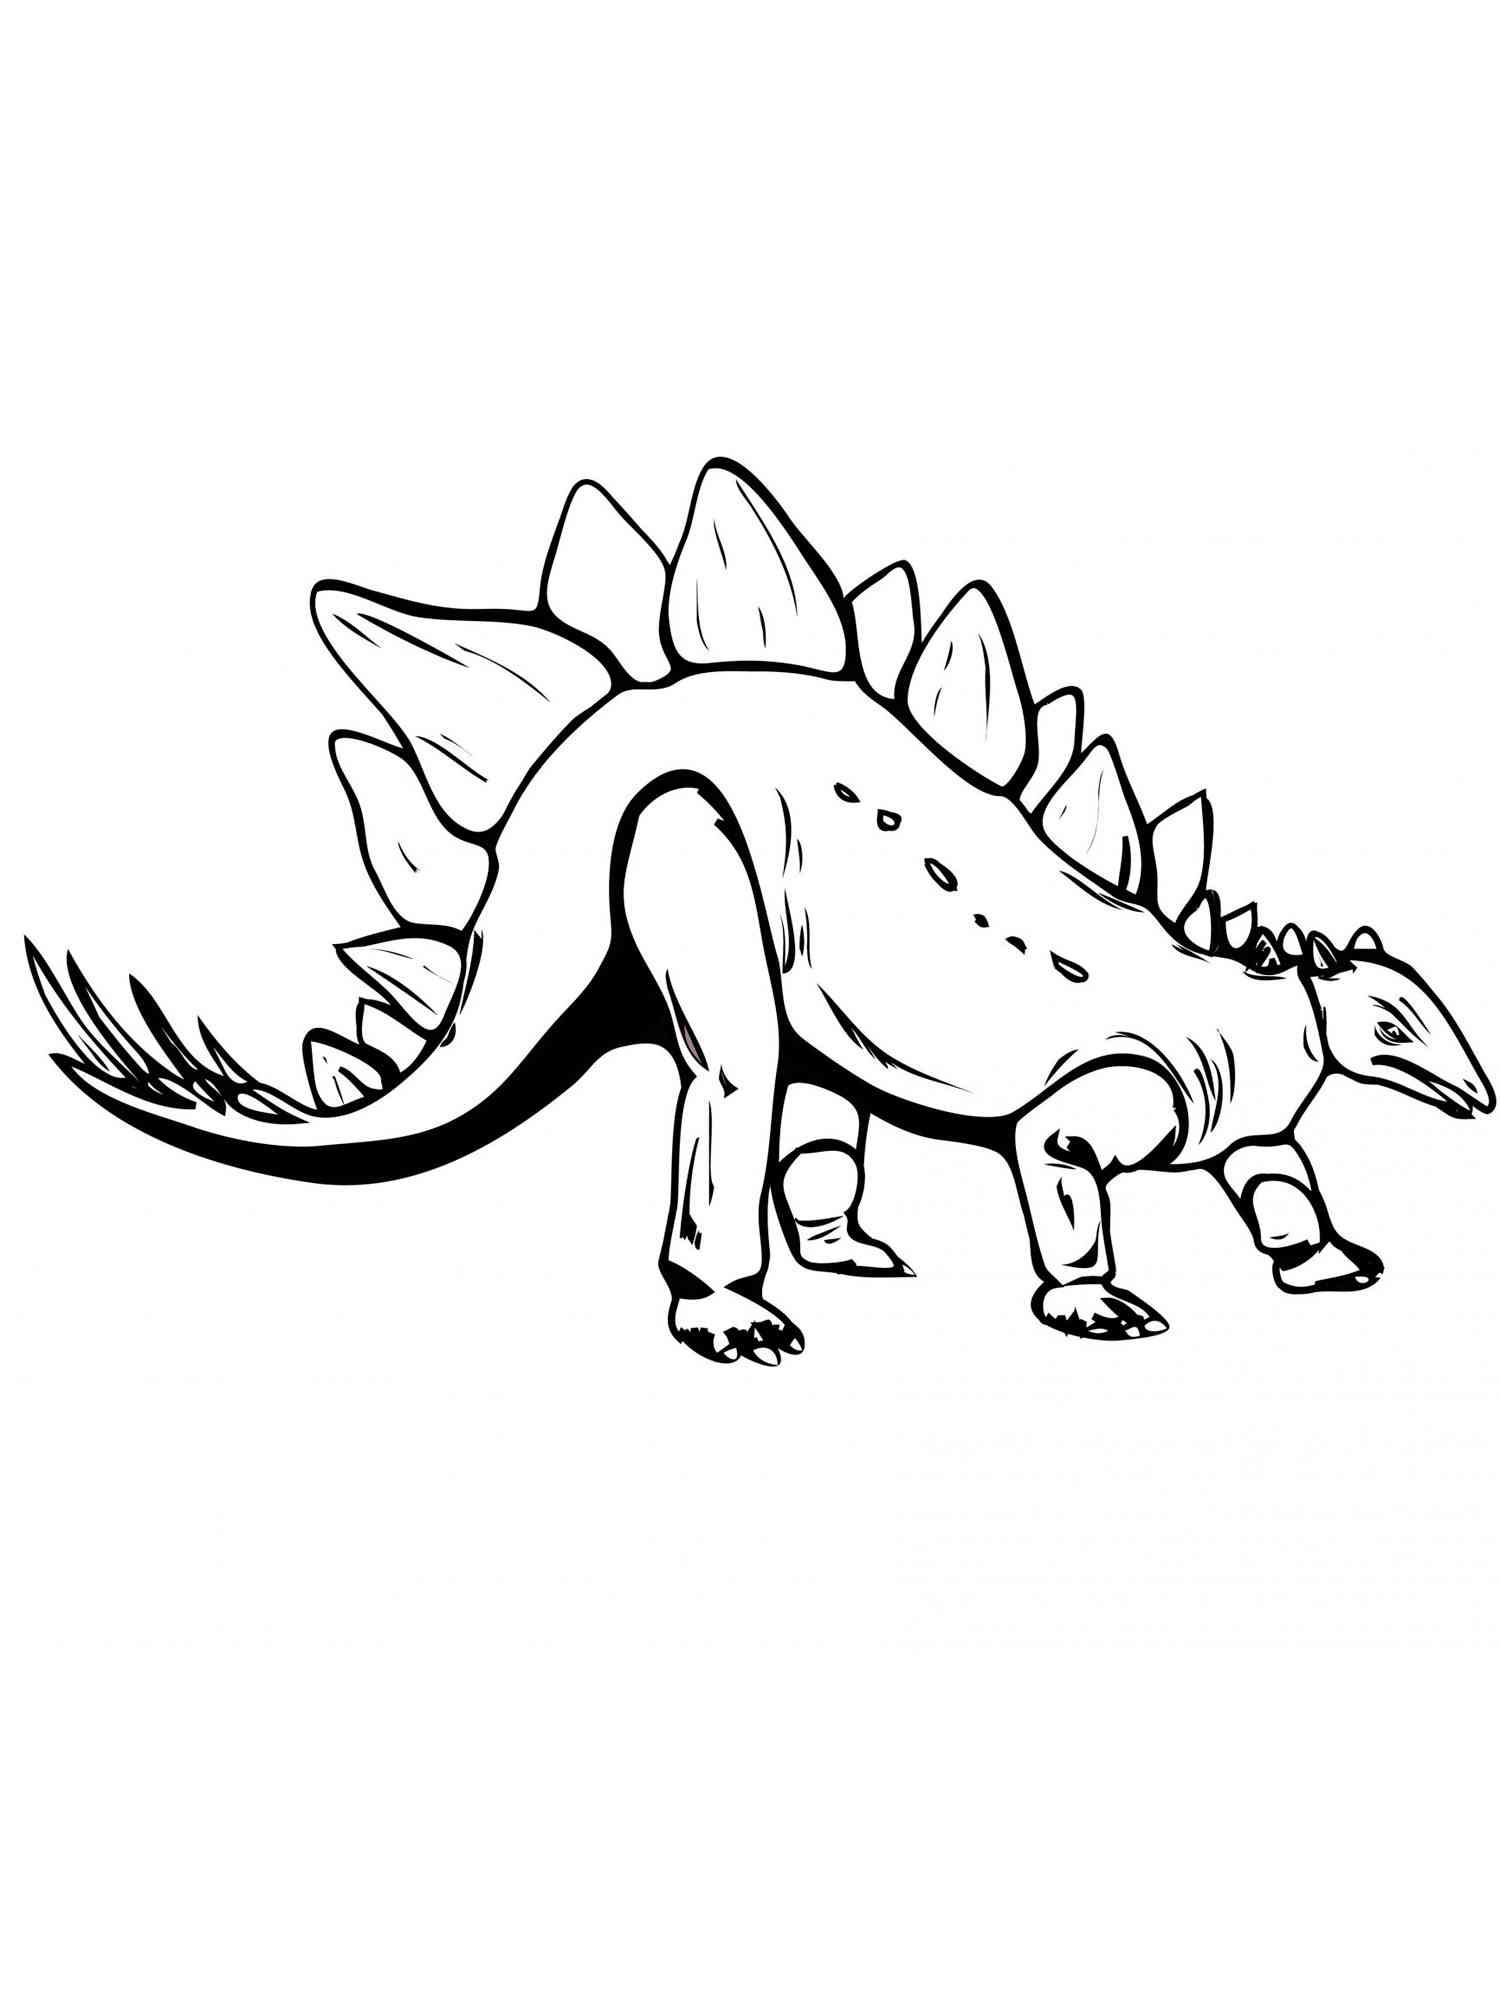 Wuerhosaurus coloring page